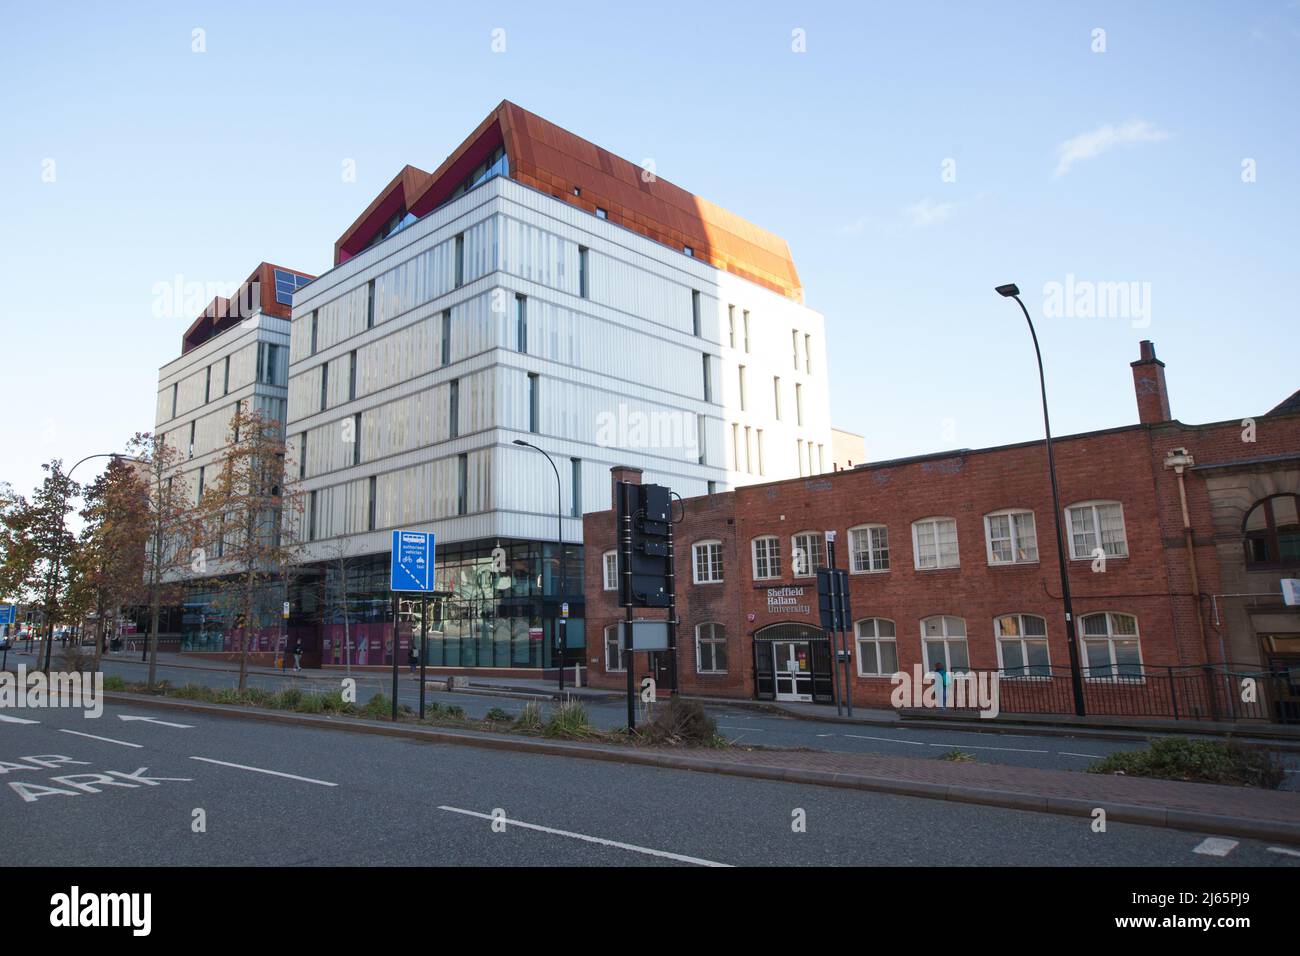 The Sheffield Hallam University, Sheffield in the United Kingdom Stock Photo